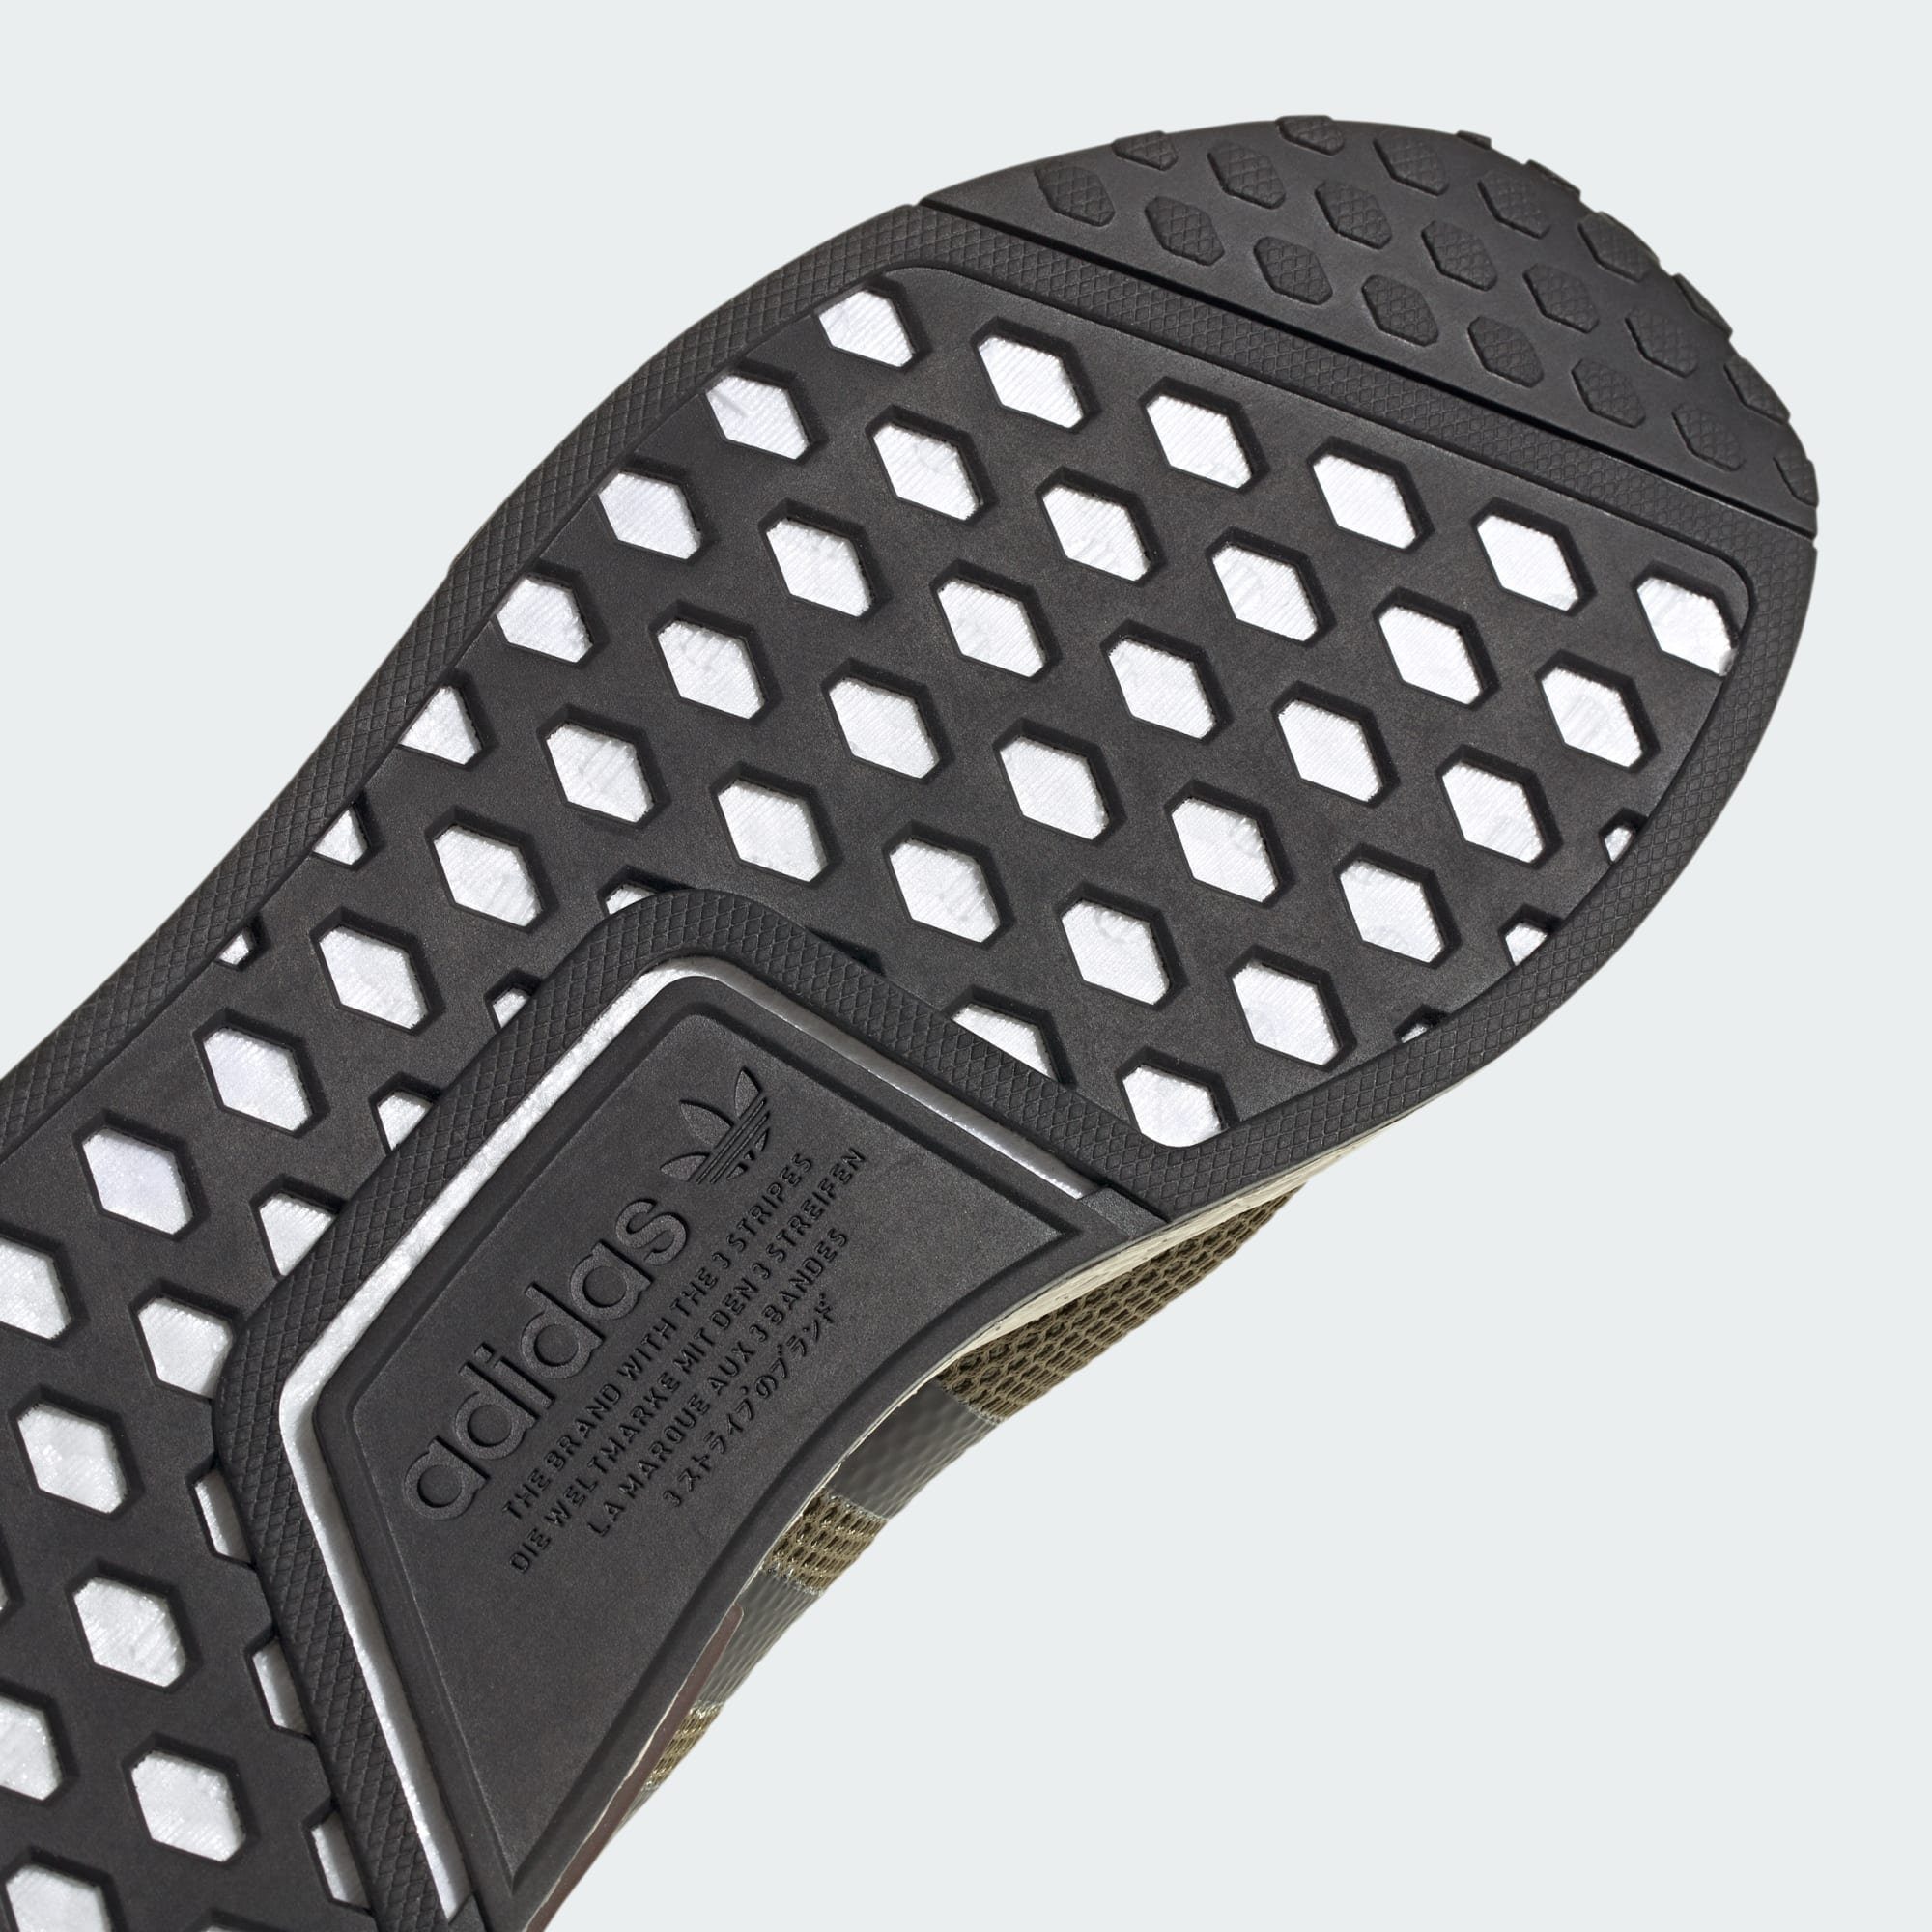 Sneaker adidas Focus / / SCHUH NMD_R1 Core Originals Shadow Olive Black Olive